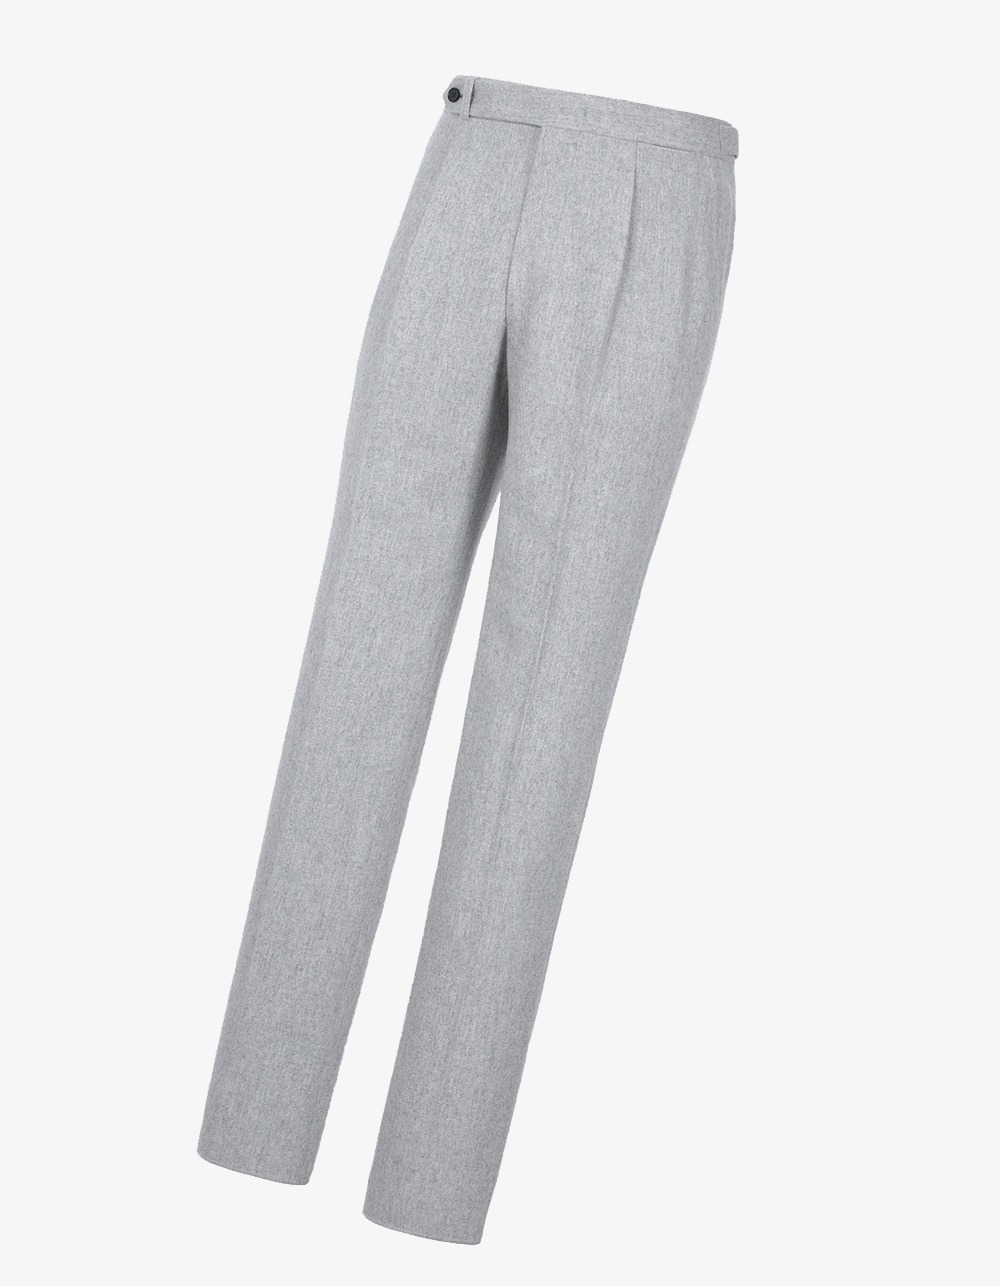 ARI Flannel Trousers(neutral gray)